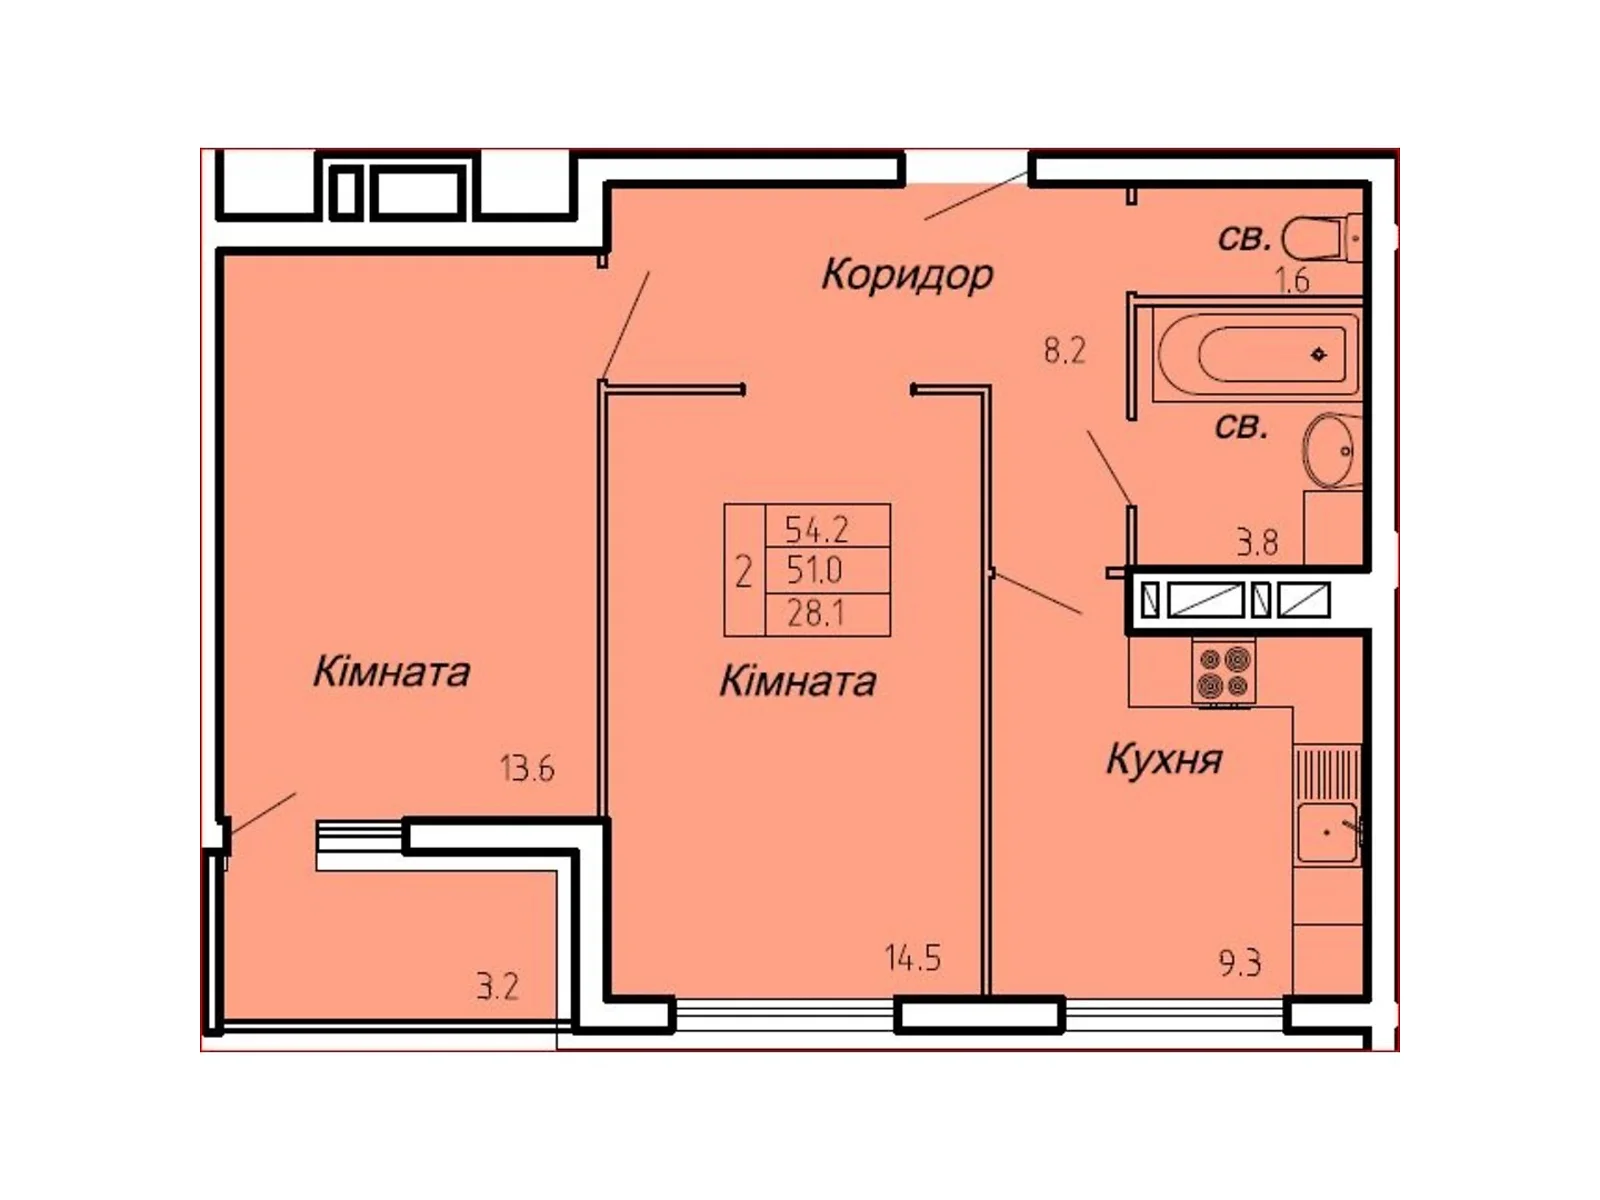 2-комнатная квартира 54.2 кв. м в Тернополе, ул. Полковника Данила Нечая, 25 - фото 1